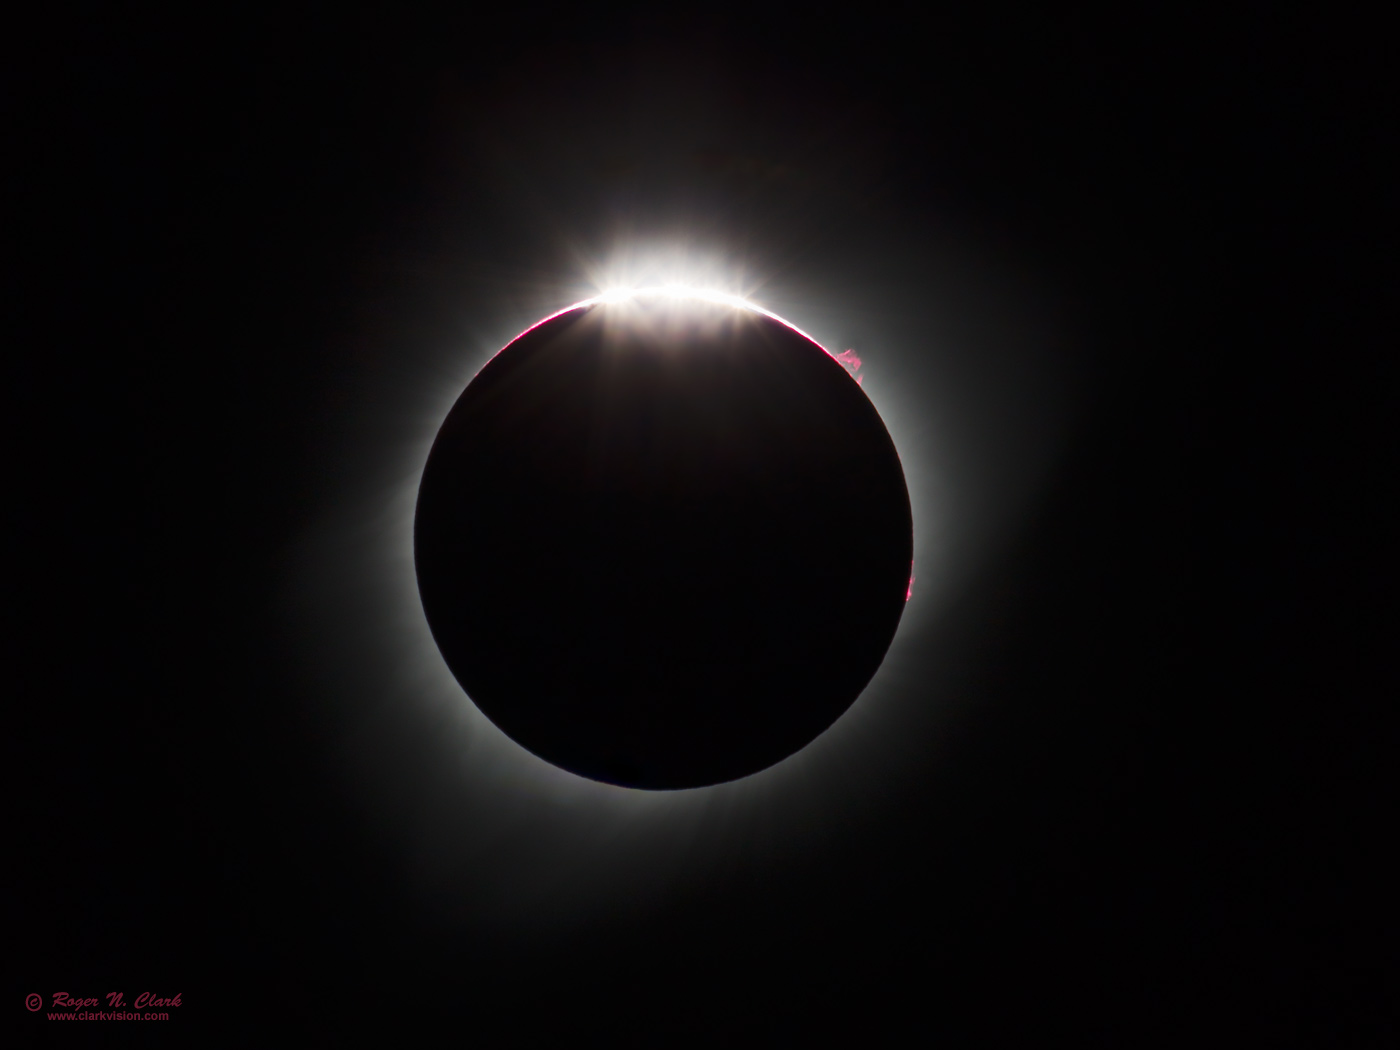 image solar-eclipse-diamondring-rnclark.c08.21.2017.IMG_0402+4-rl.f-c2-0.5xs.jpg is Copyrighted by Roger N. Clark, www.clarkvision.com